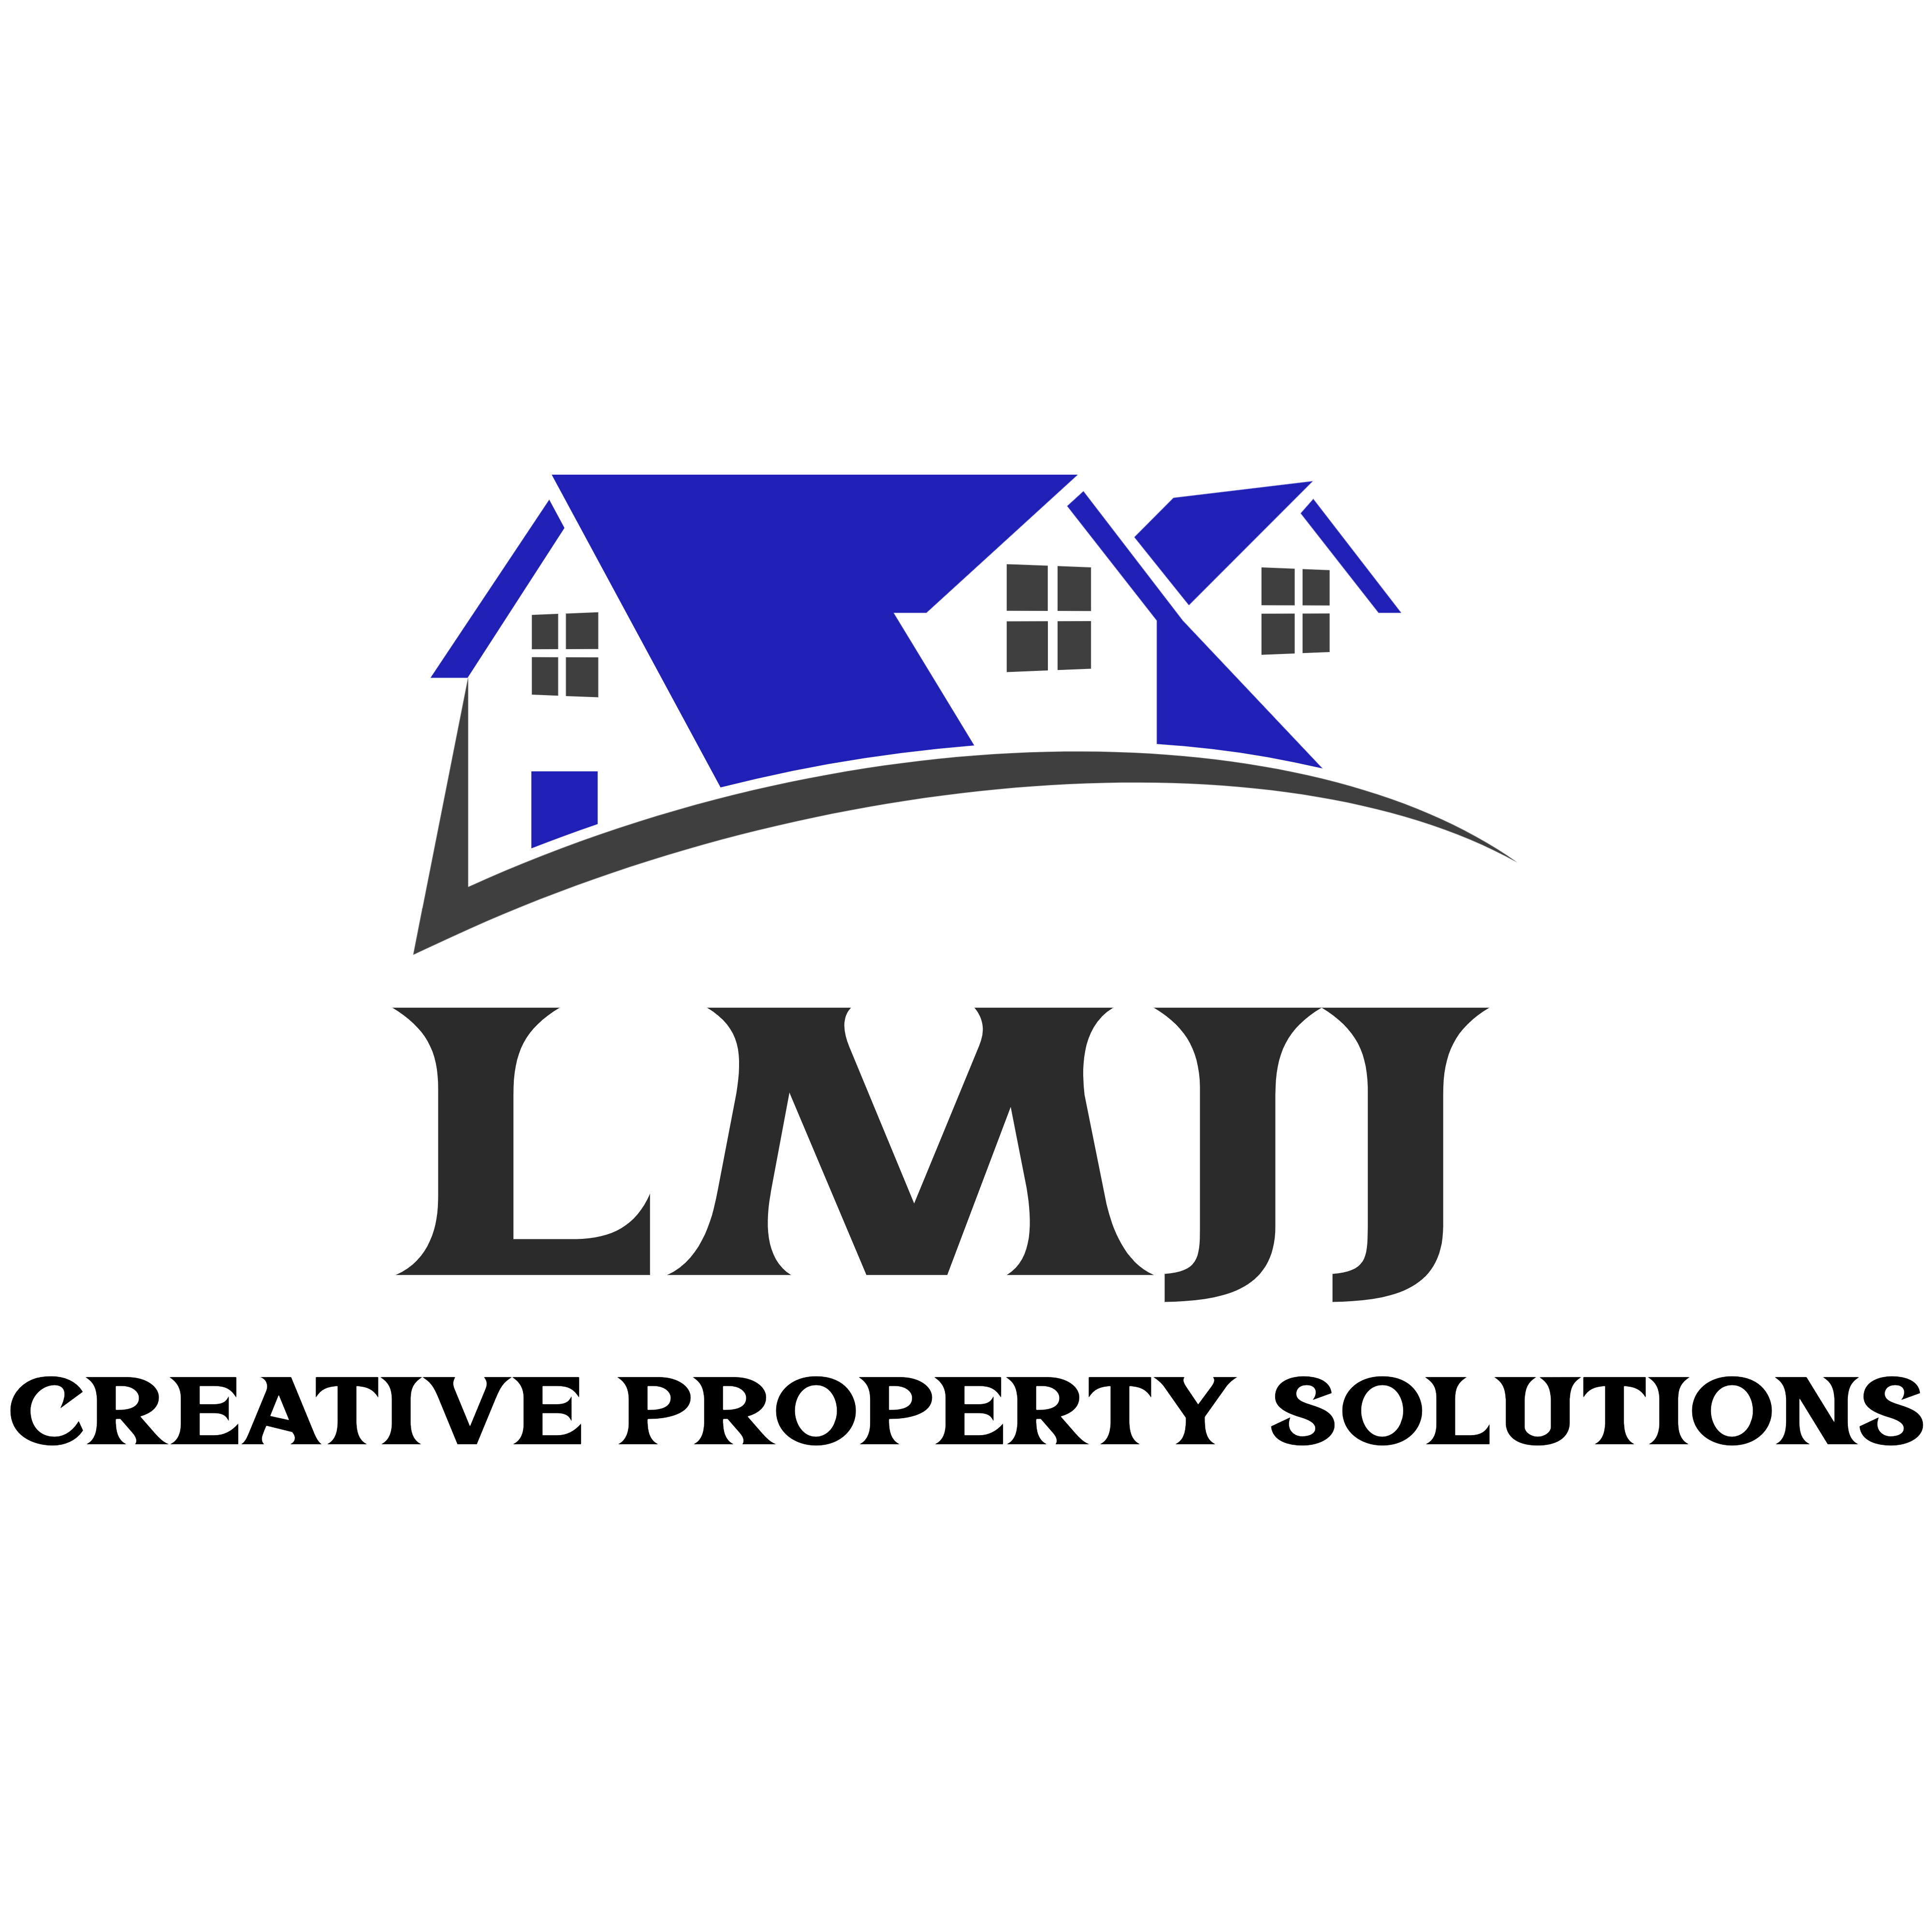 LMJJ Creative Property Solutions